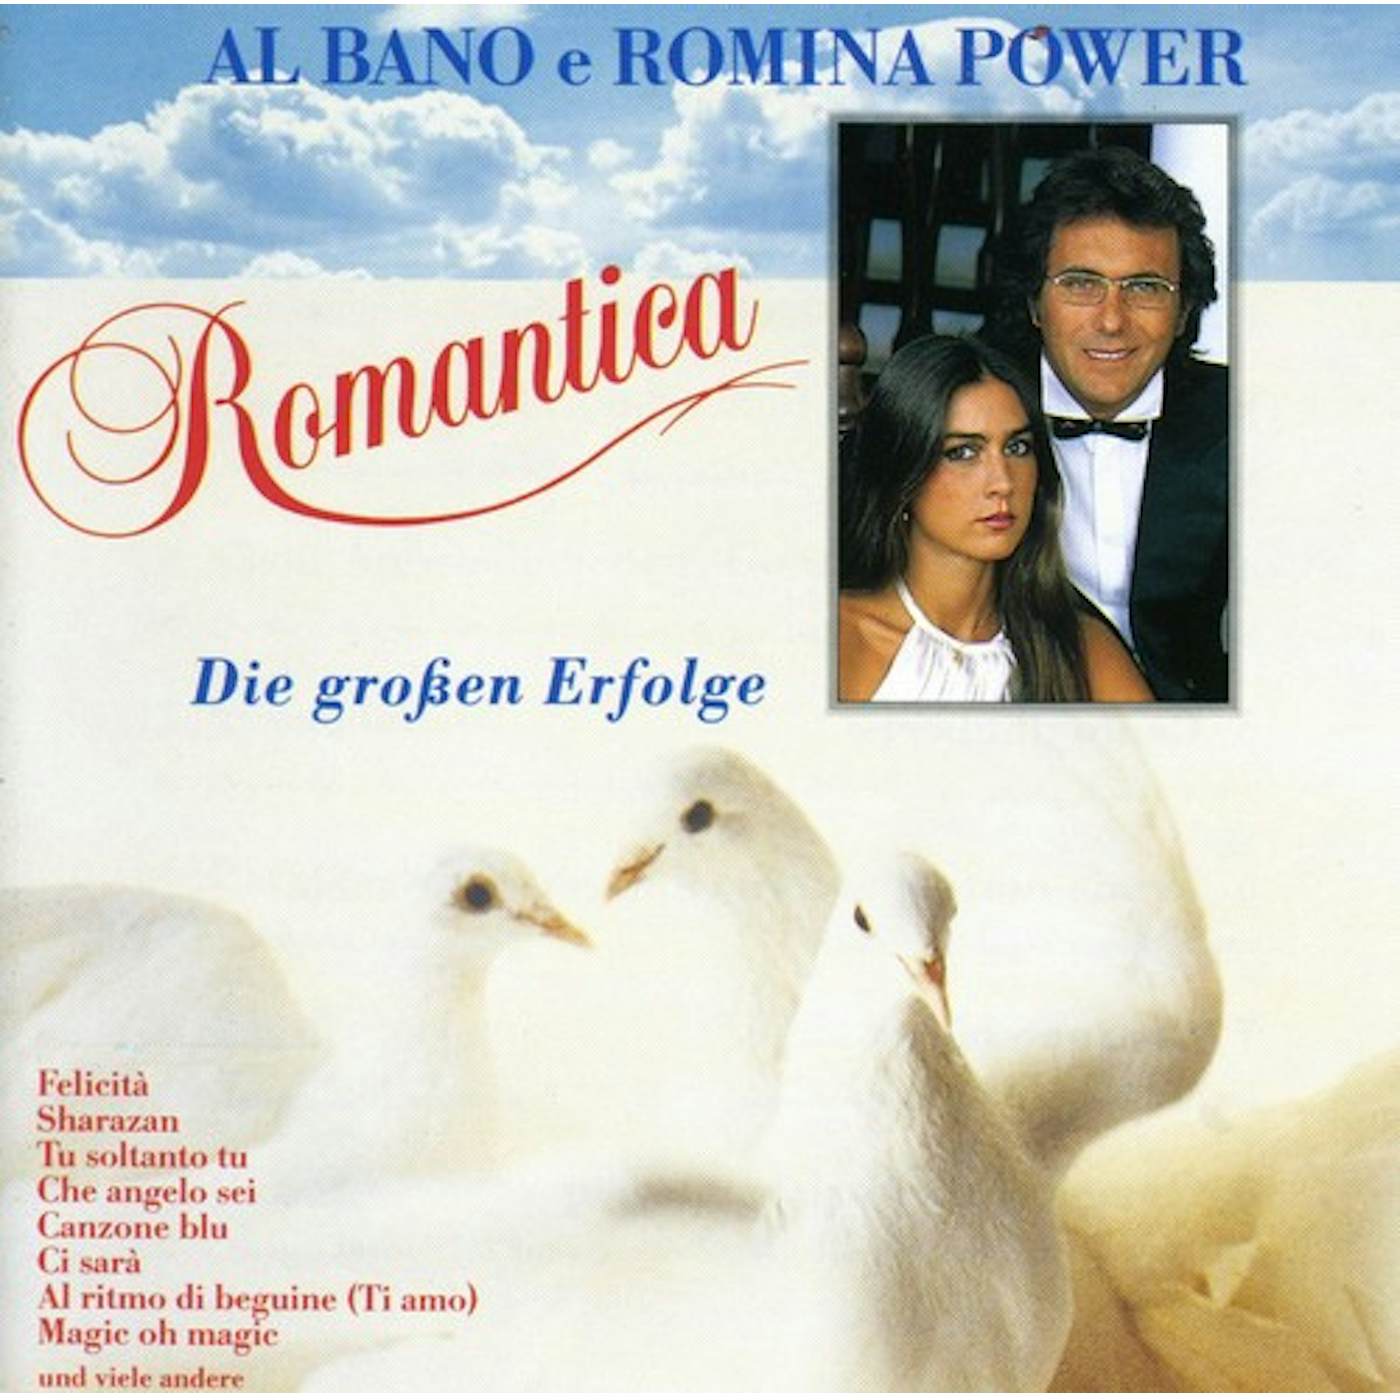 Al Bano And Romina Power ROMANTICA CD